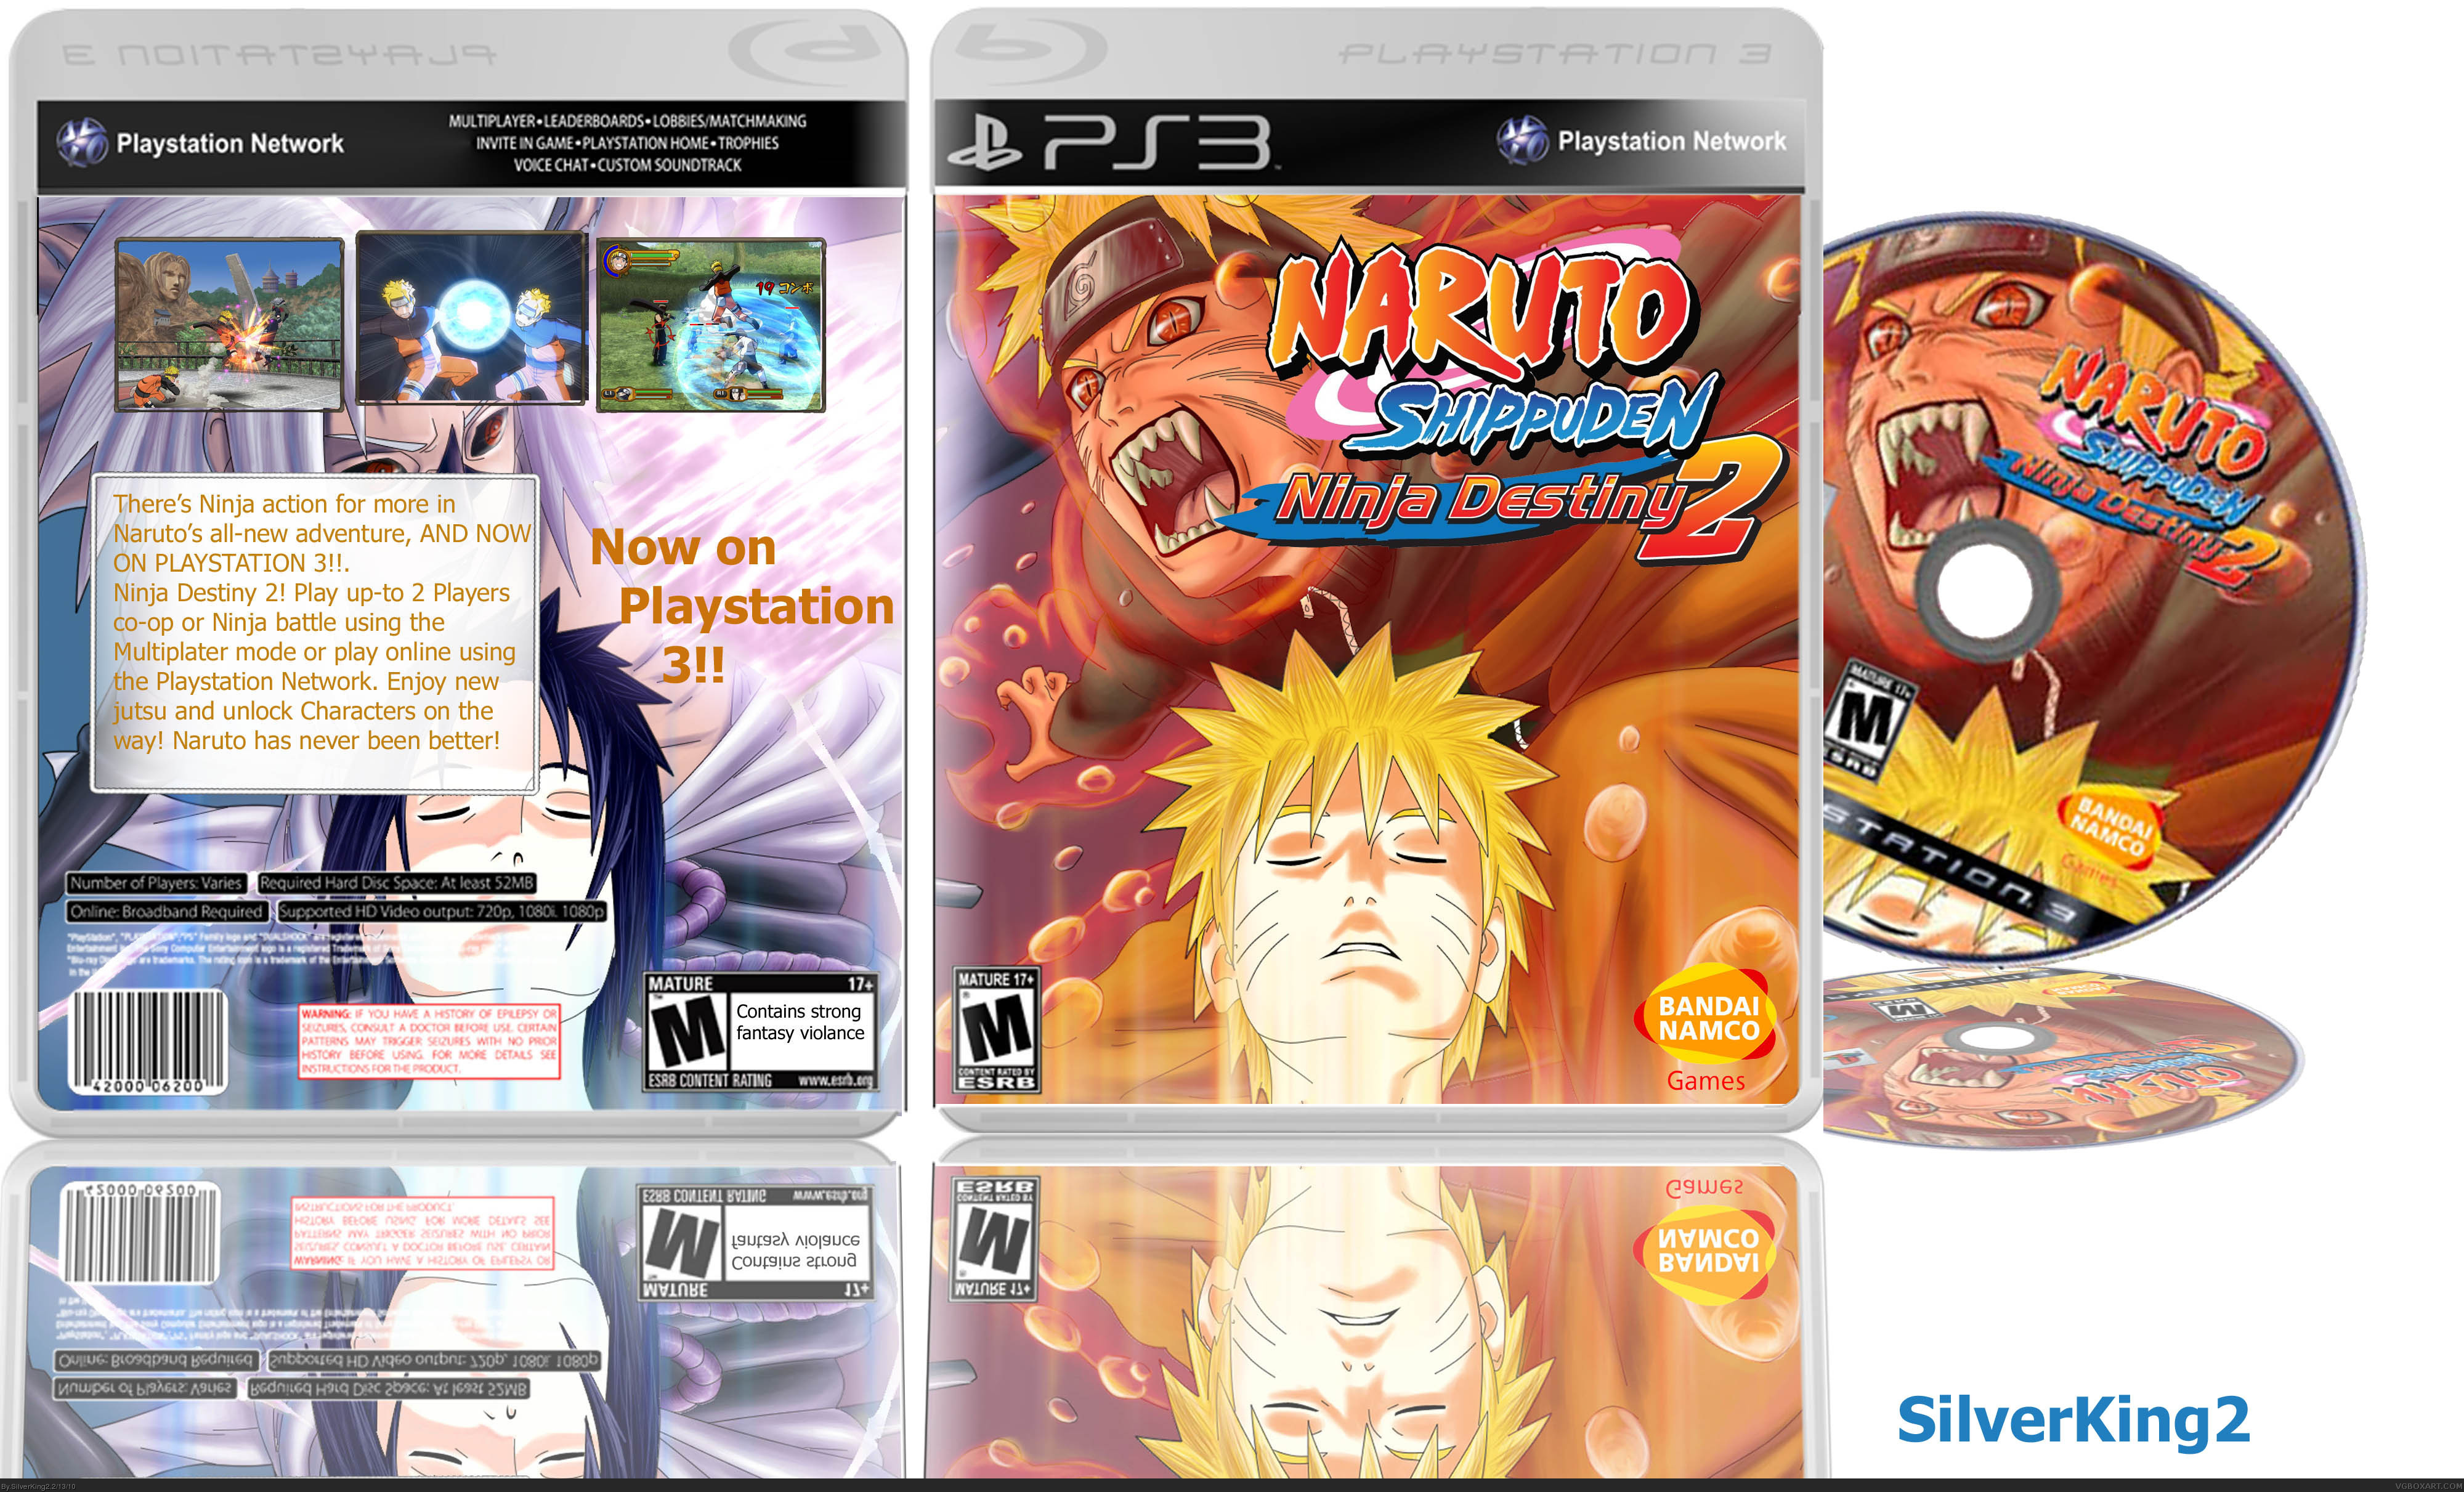 Naruto Shippuden: Ninja Destiny 2 box cover